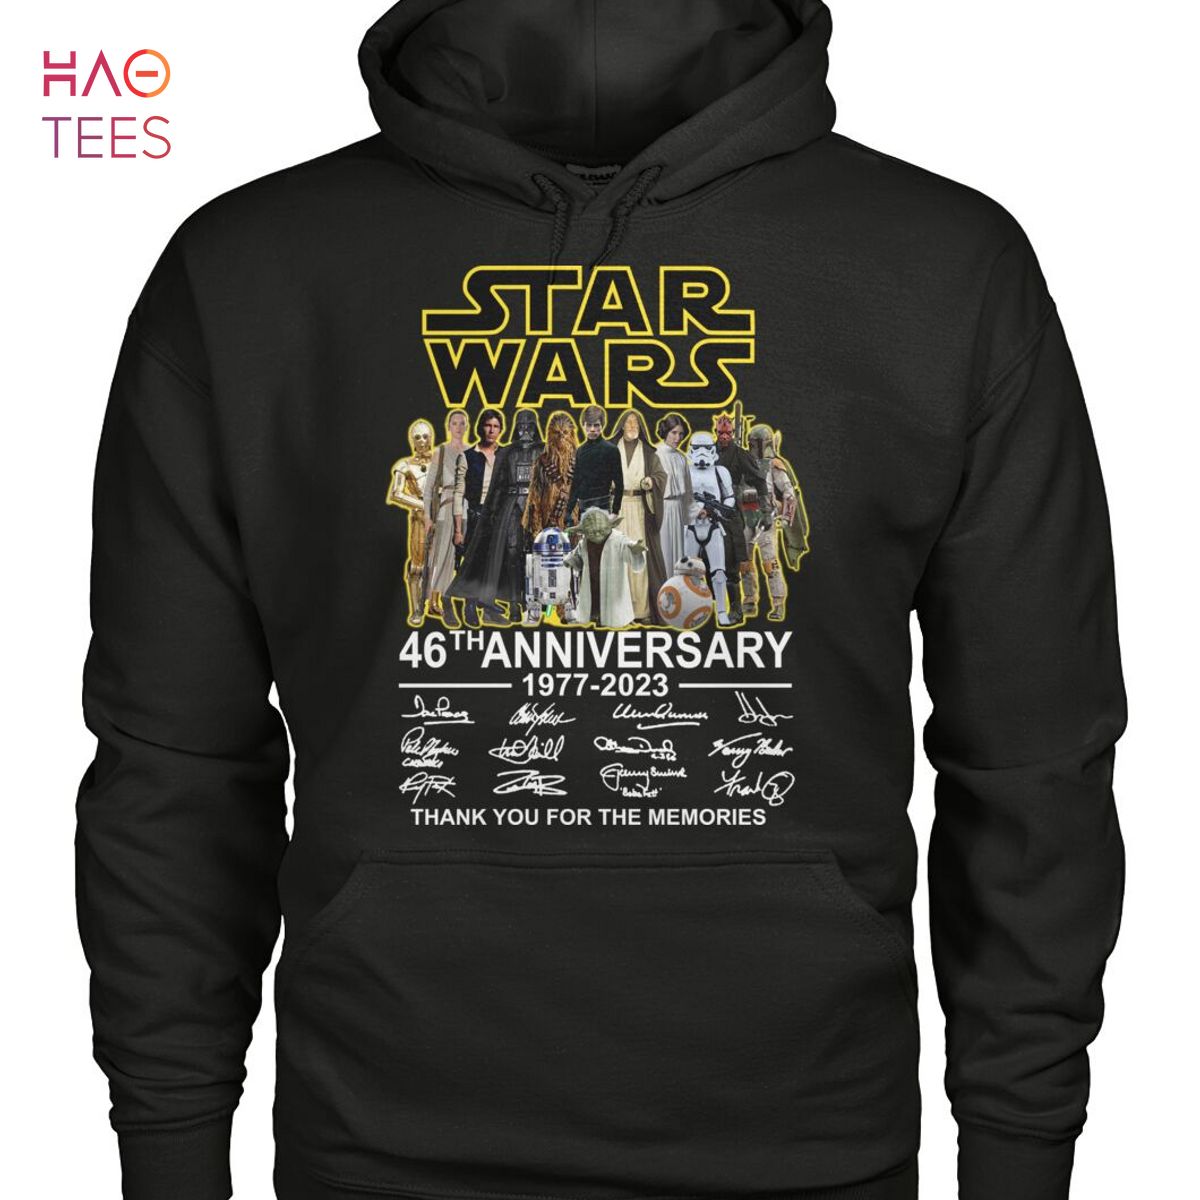 Star Wars Day 2023 Han Solo Posing With Gun Colorfull Art Unisex T-Shirt -  Mugteeco